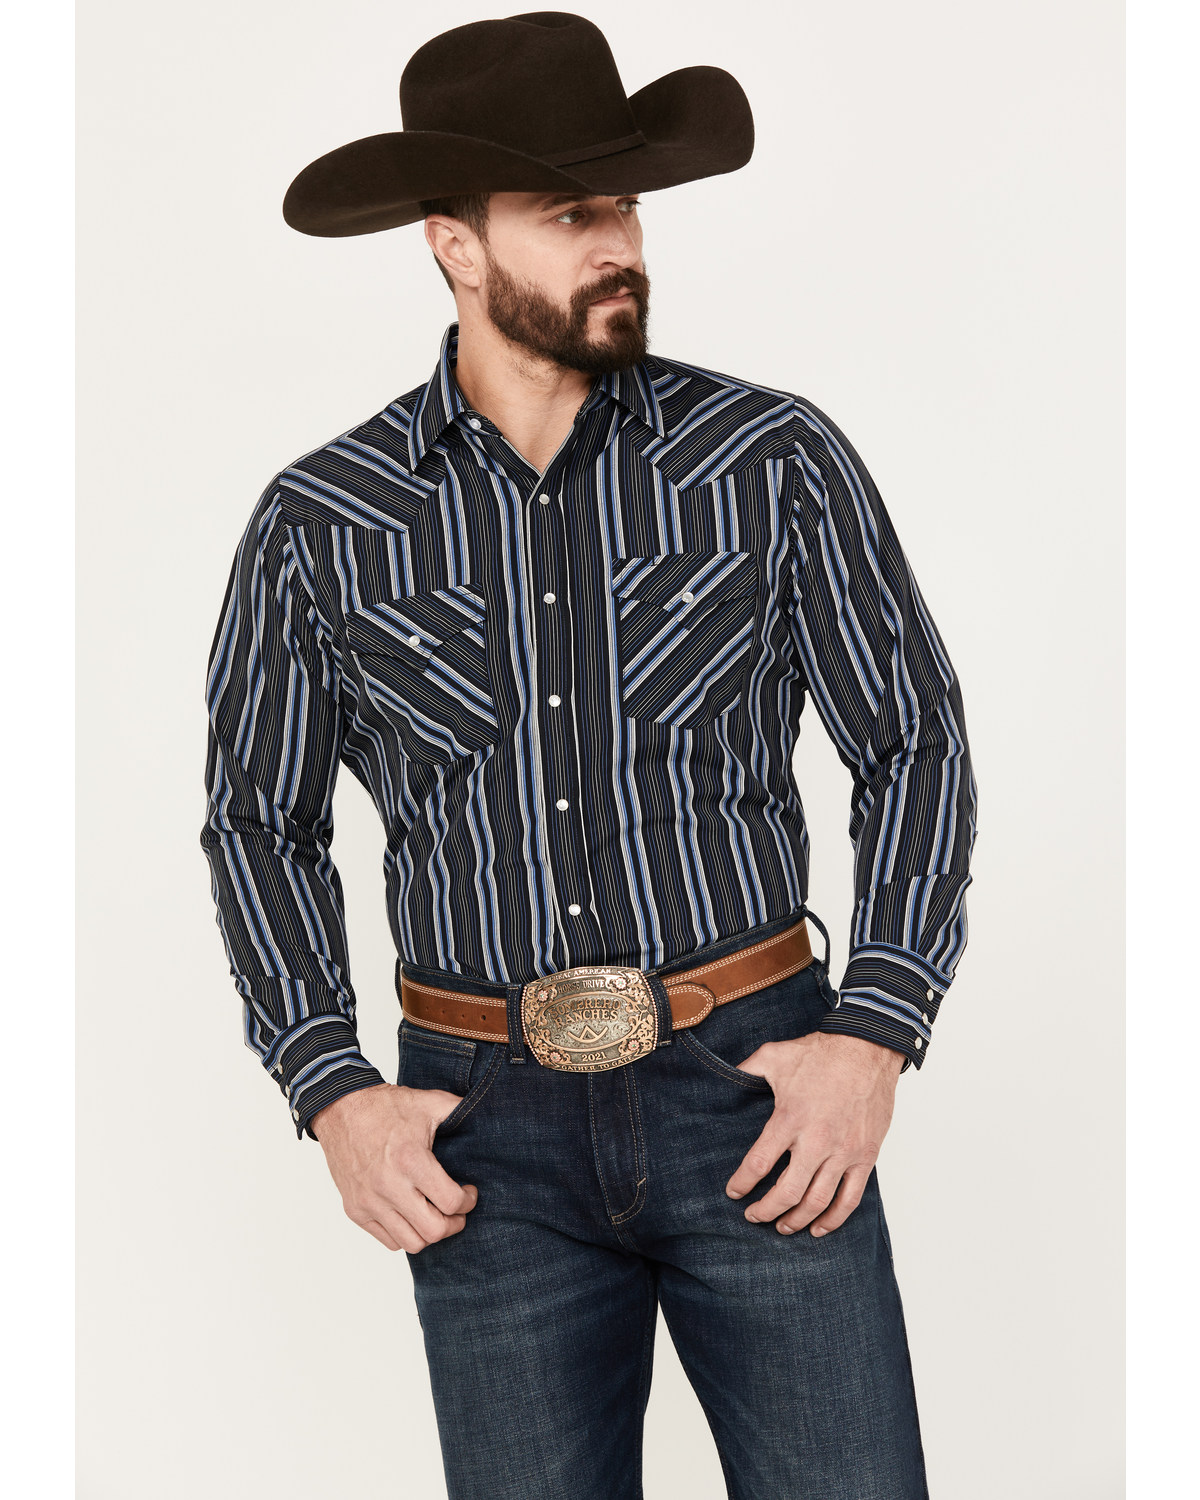 Ely Walker Men's Striped Long Sleeve Pearl Snap Western Shirt